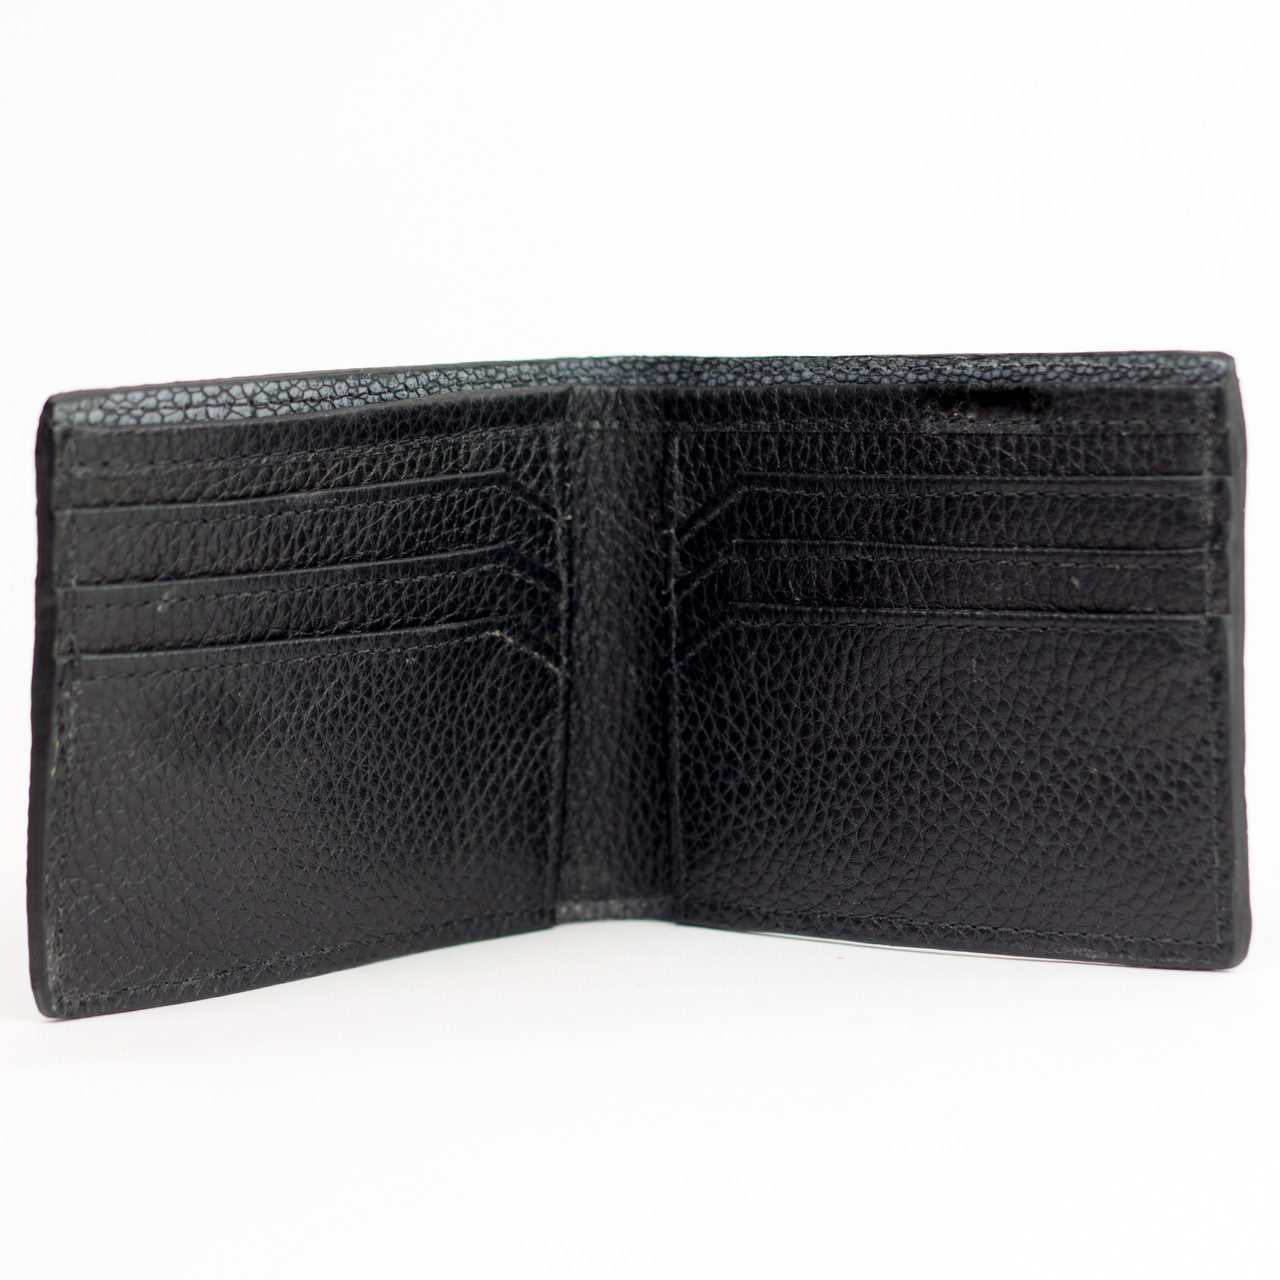 Ostrich Leg Wallet With Bison Leather Interior